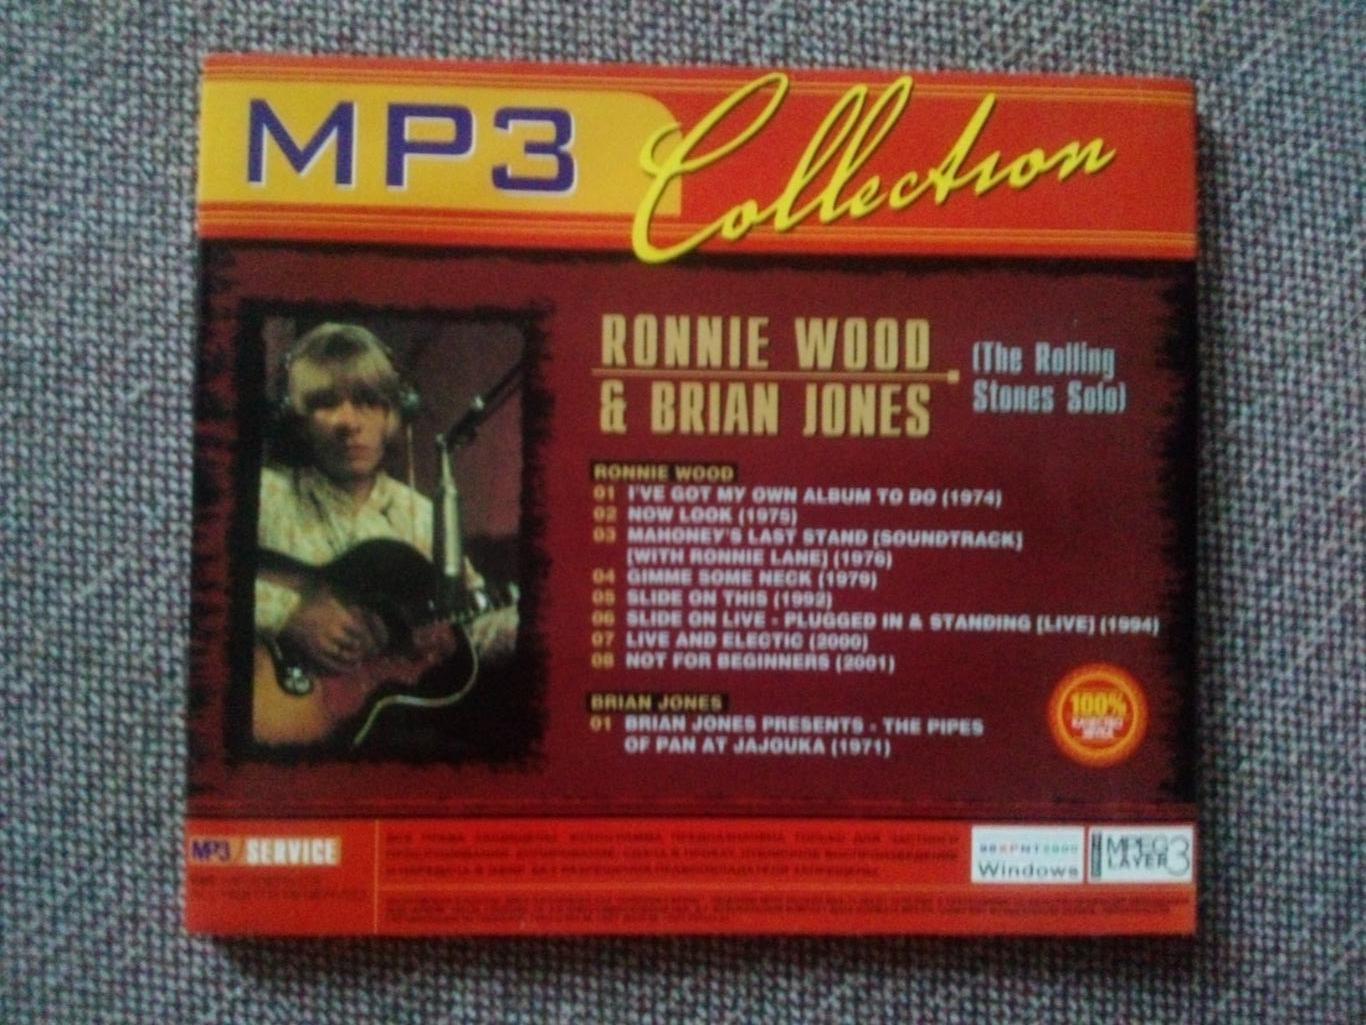 MP - 3 CD диск : Гитаристы группы Rolling Stones : Ronnie Wood & Brain Jones 5